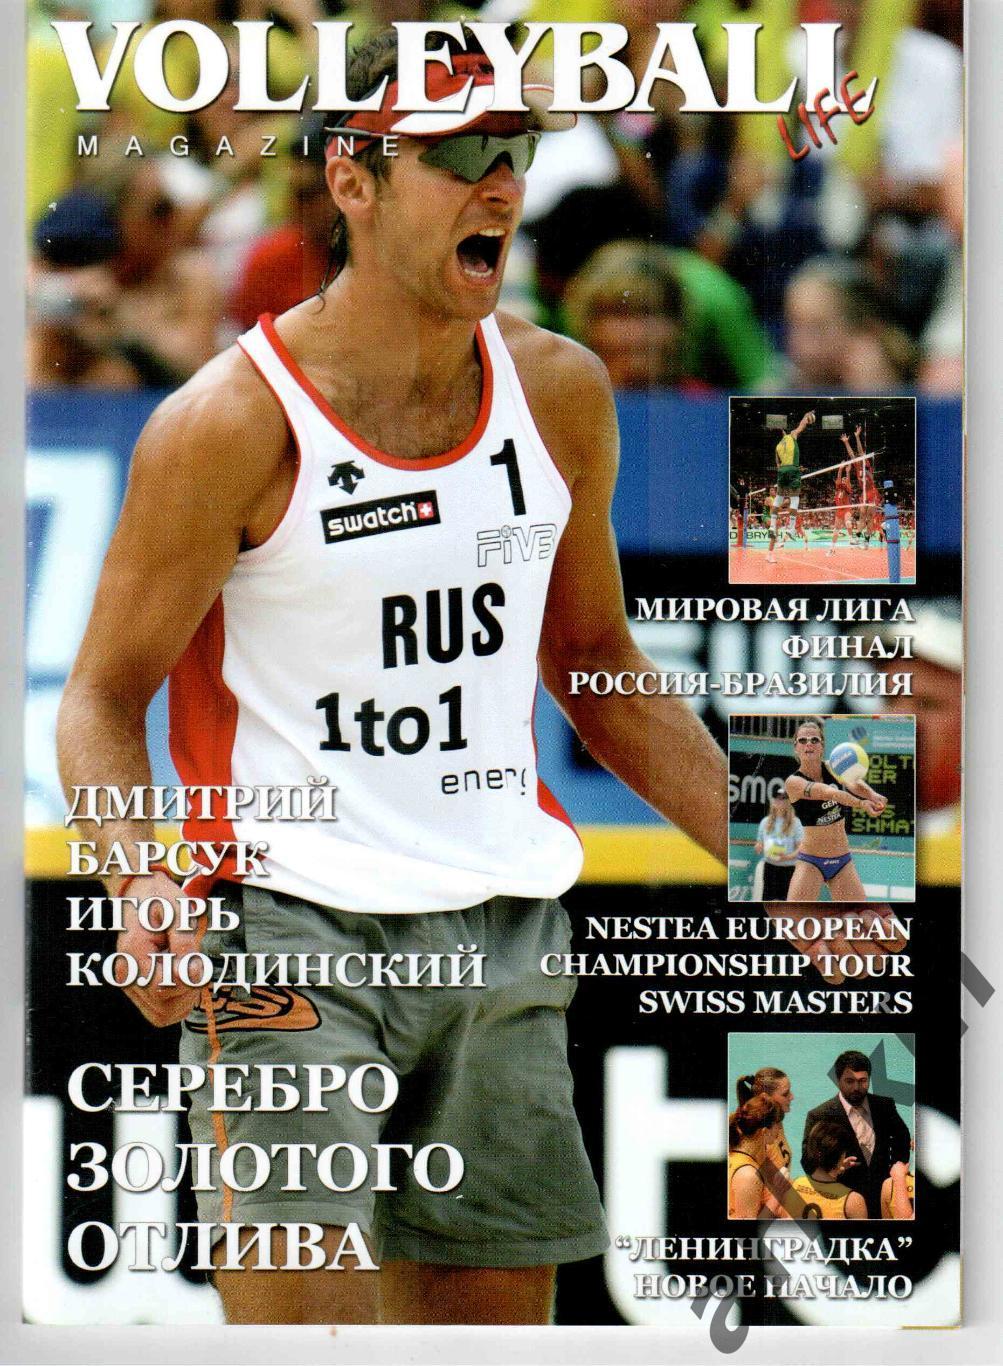 Журнал Волейбол Лайф. №1 2017 год. Издание Санкт-Петербург